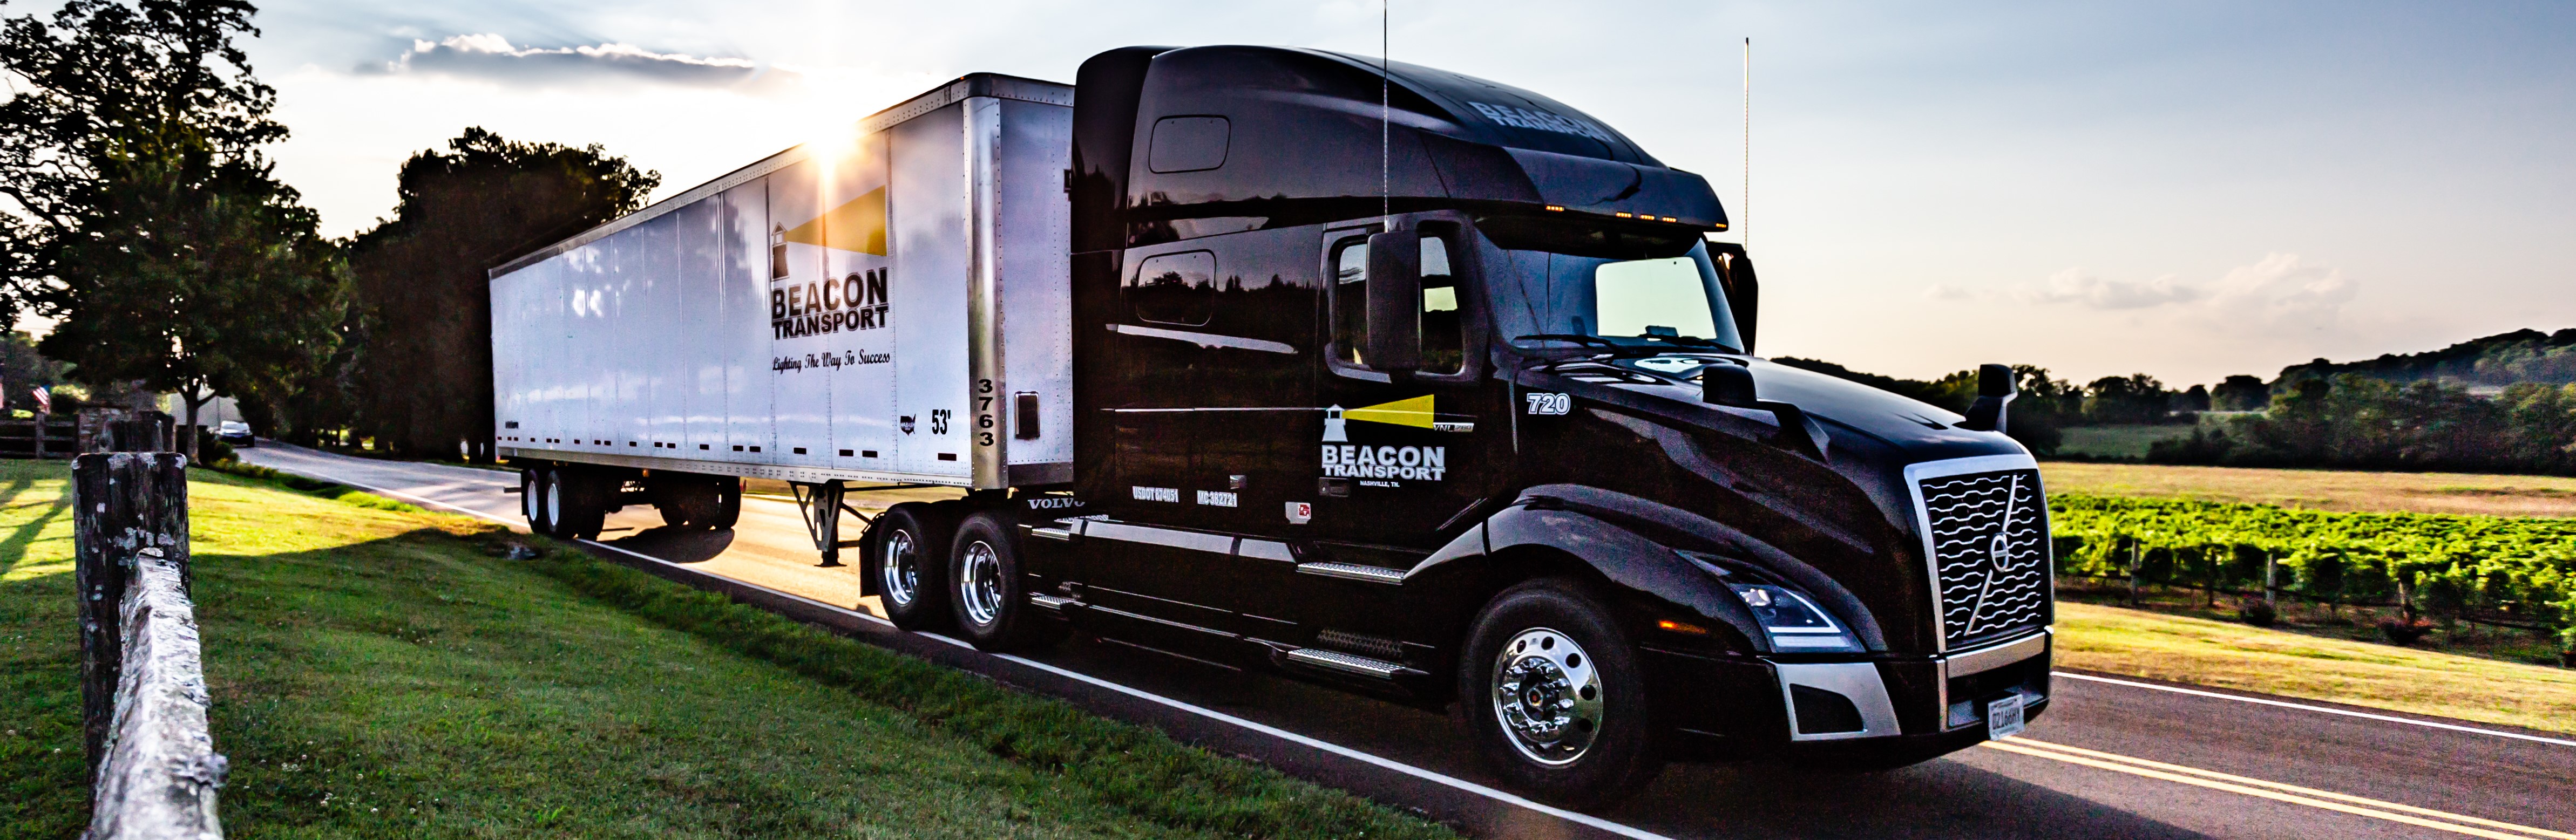 Truck Driving Jobs in Nashville, TN - Beacon Transport